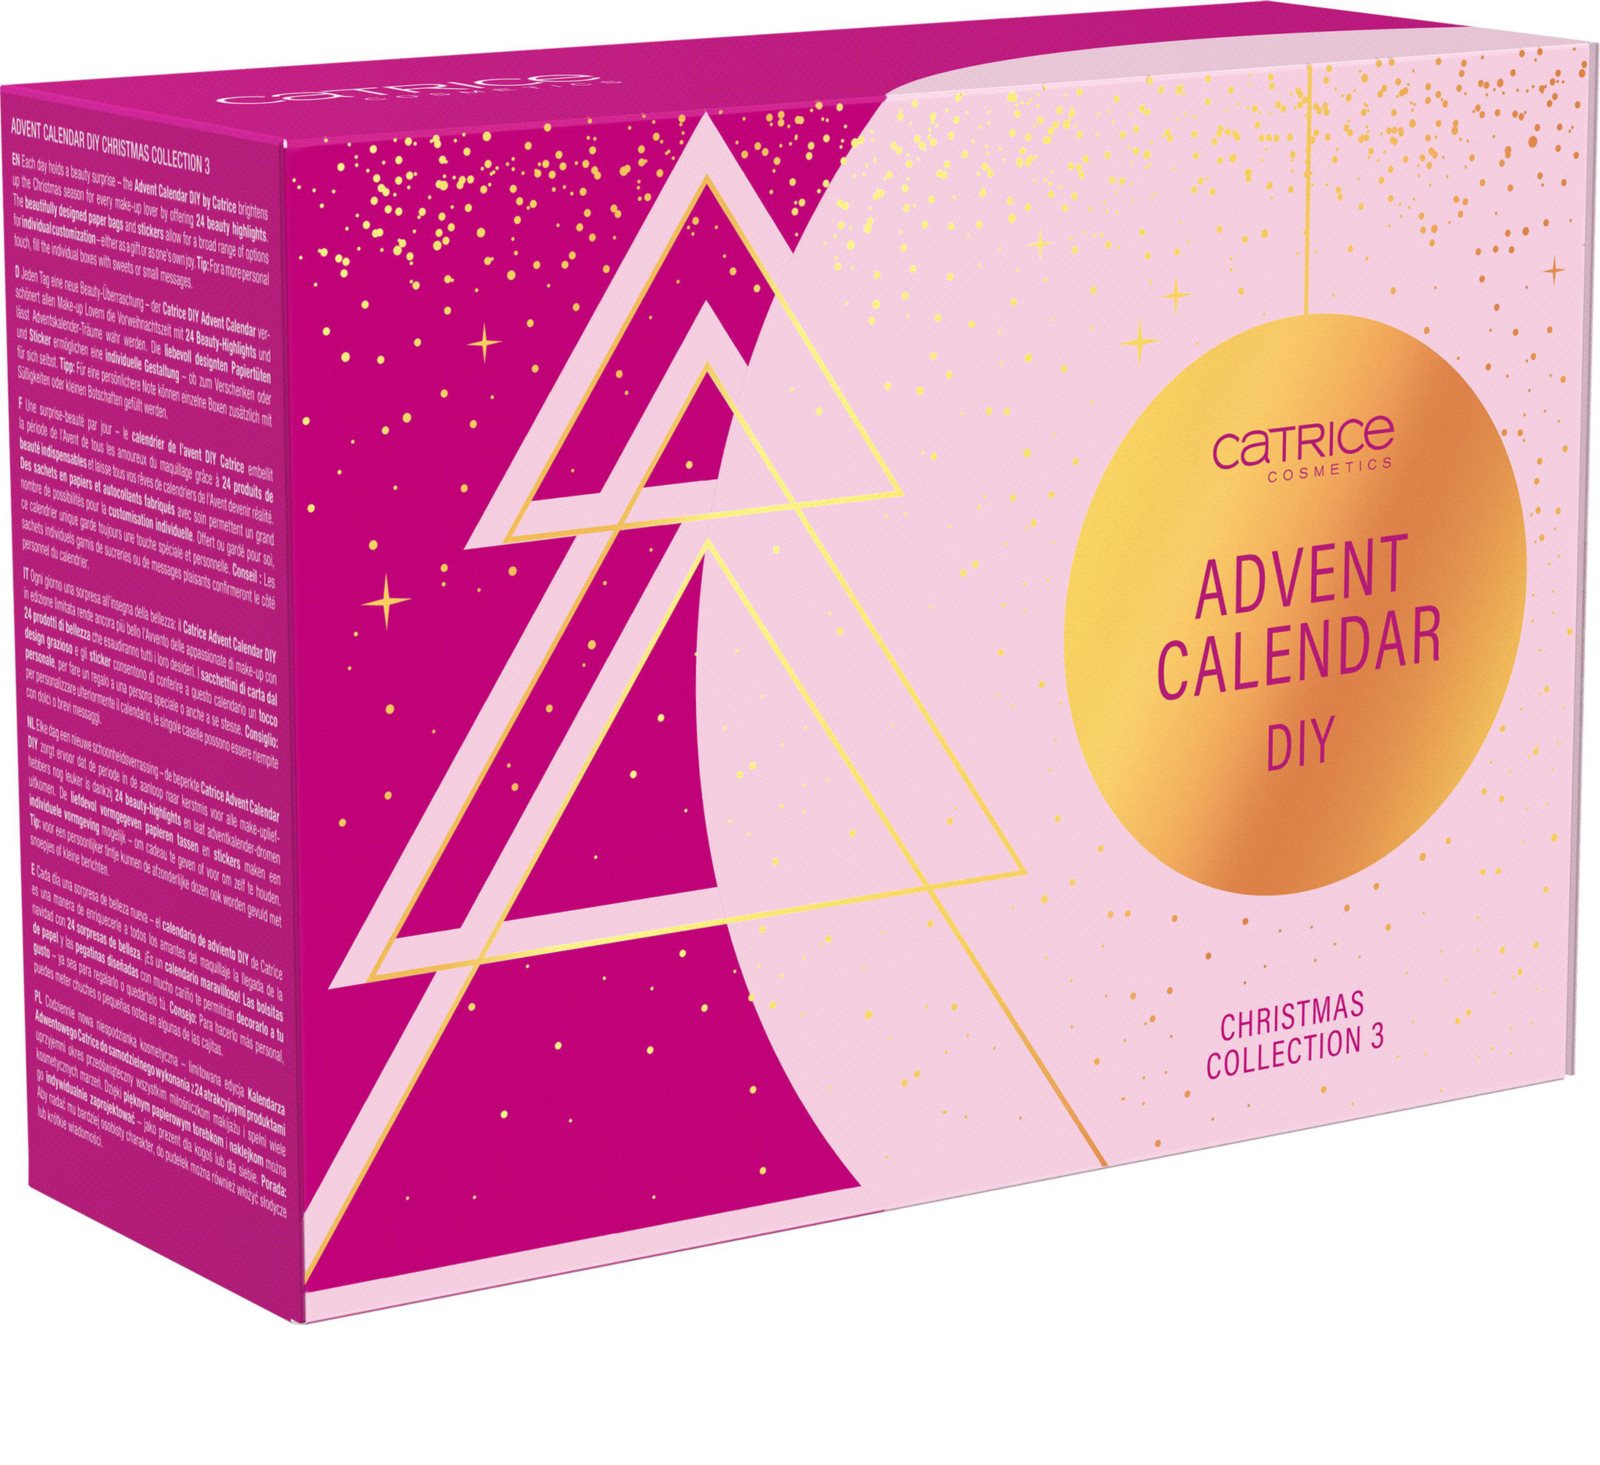 catrice-advent-calendar-diy-christmas-collection-3-adventi-naptar_1.jpeg